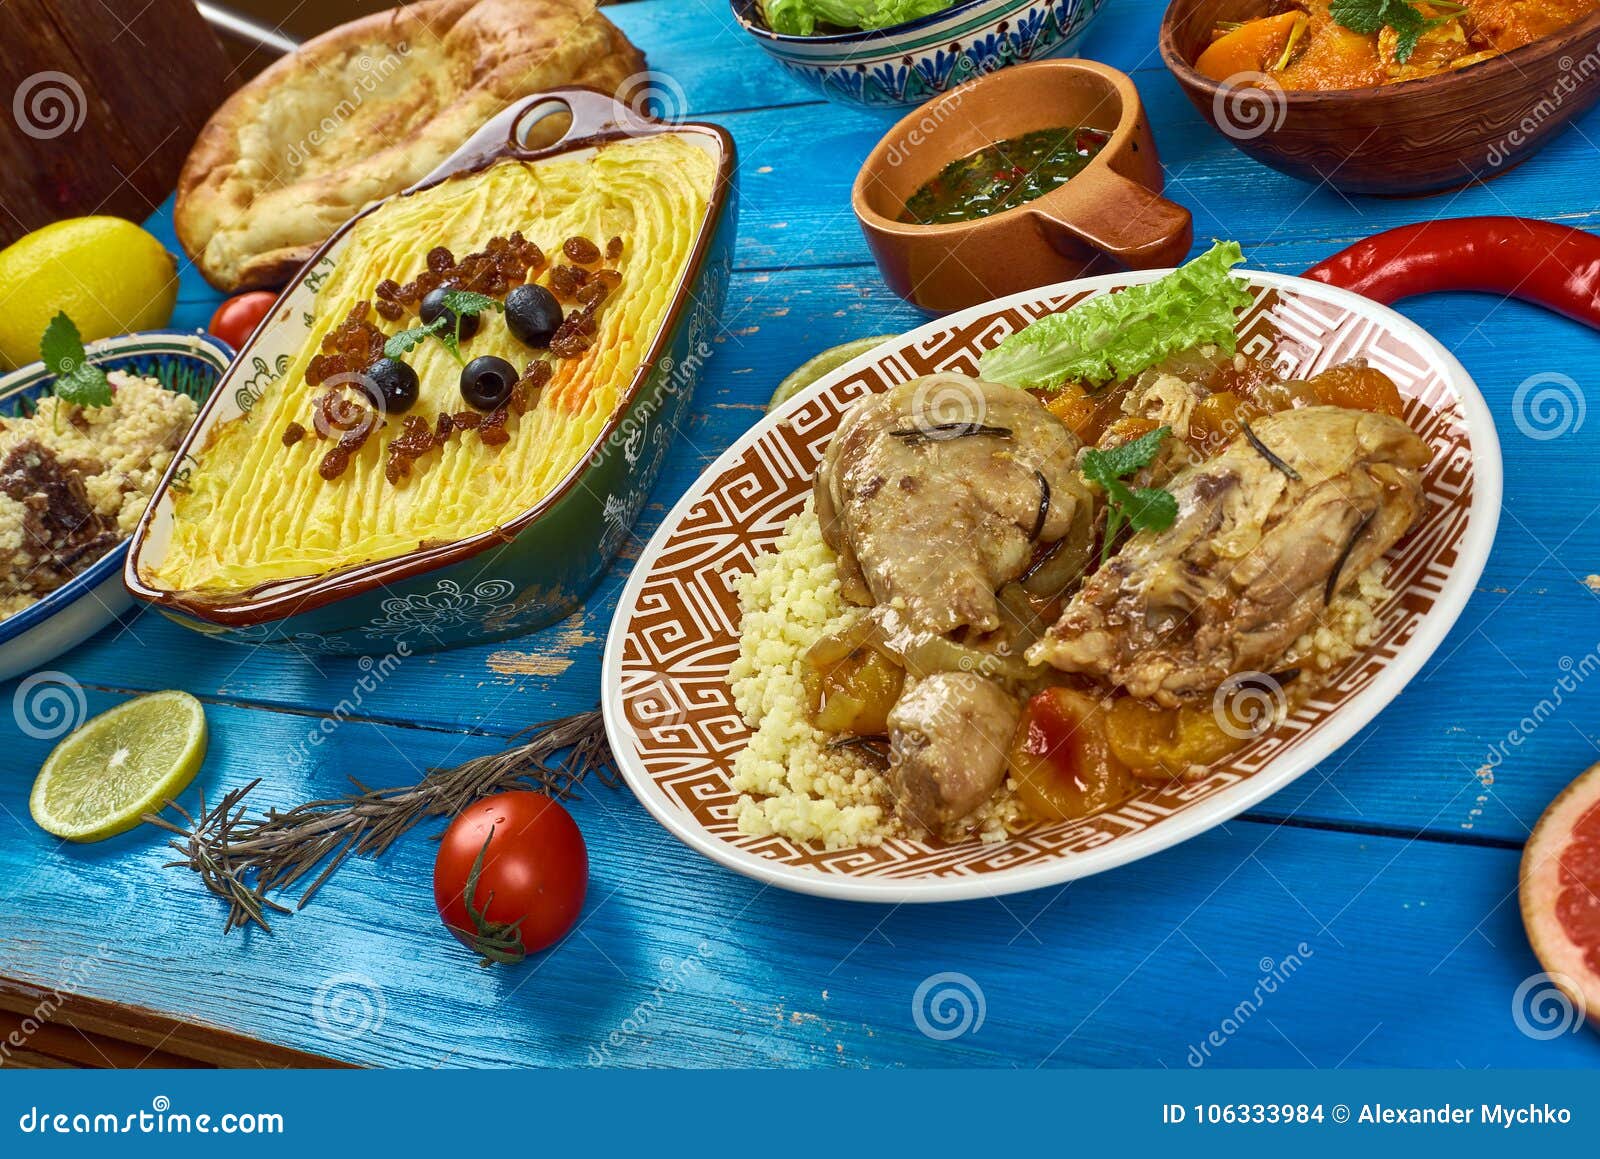 maghreb cuisine